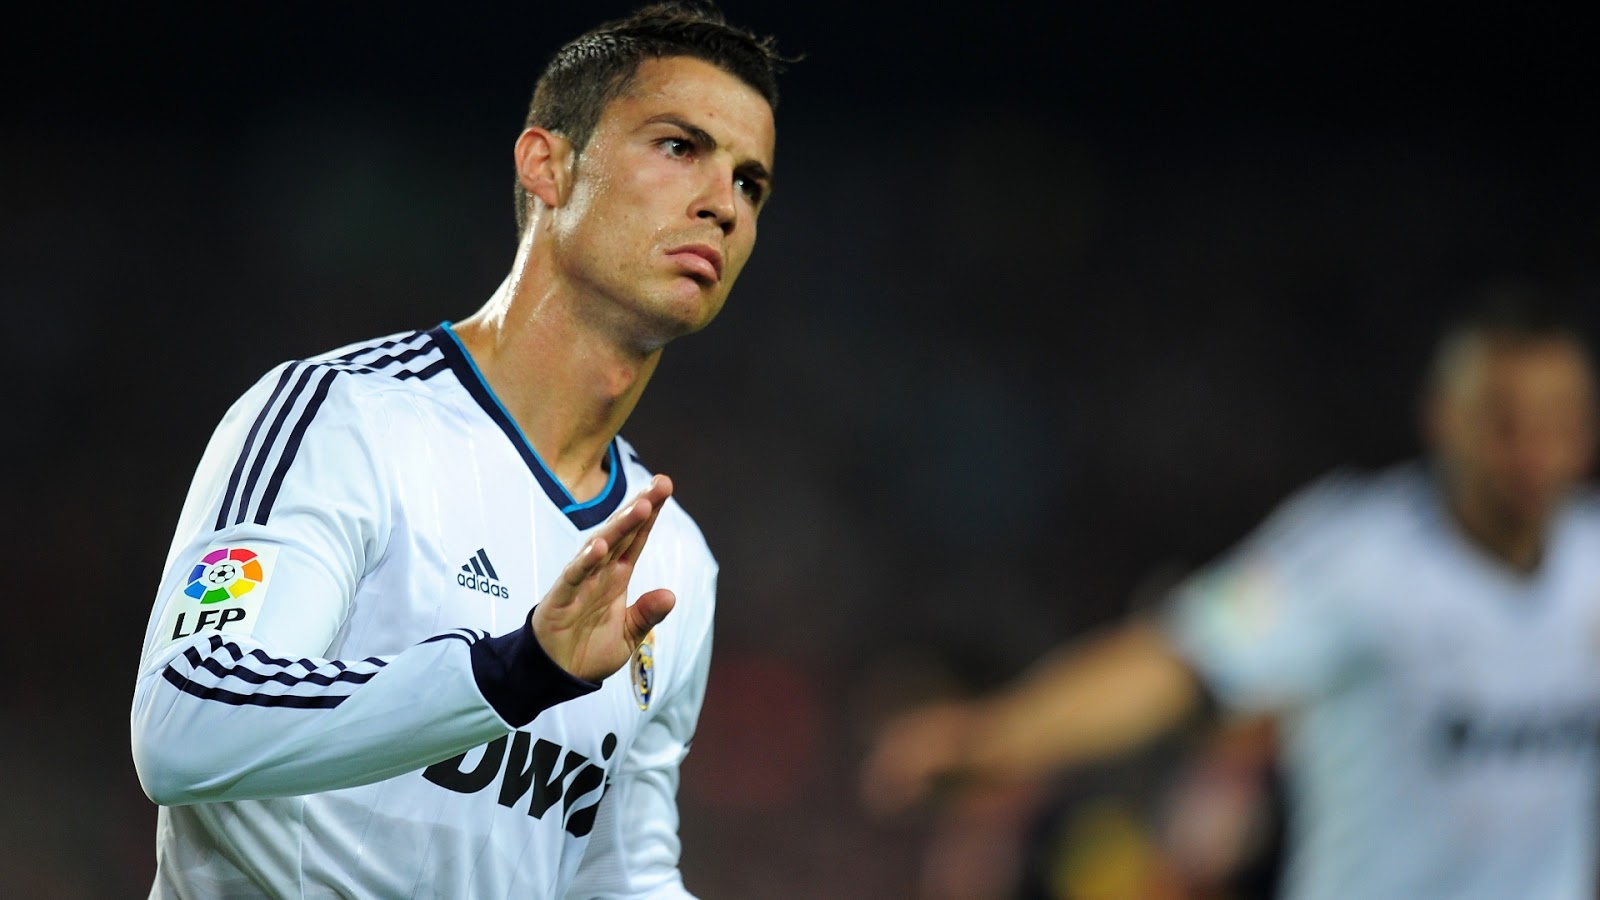 http://3.bp.blogspot.com/-7KcWRwp2FMA/UPneOPAaz2I/AAAAAAAAPHI/tAFvWf83_eI/s1600/Cristiano-Ronaldo-2013-HD-Wallpaper-Picture-Real-Madrid-10.jpg